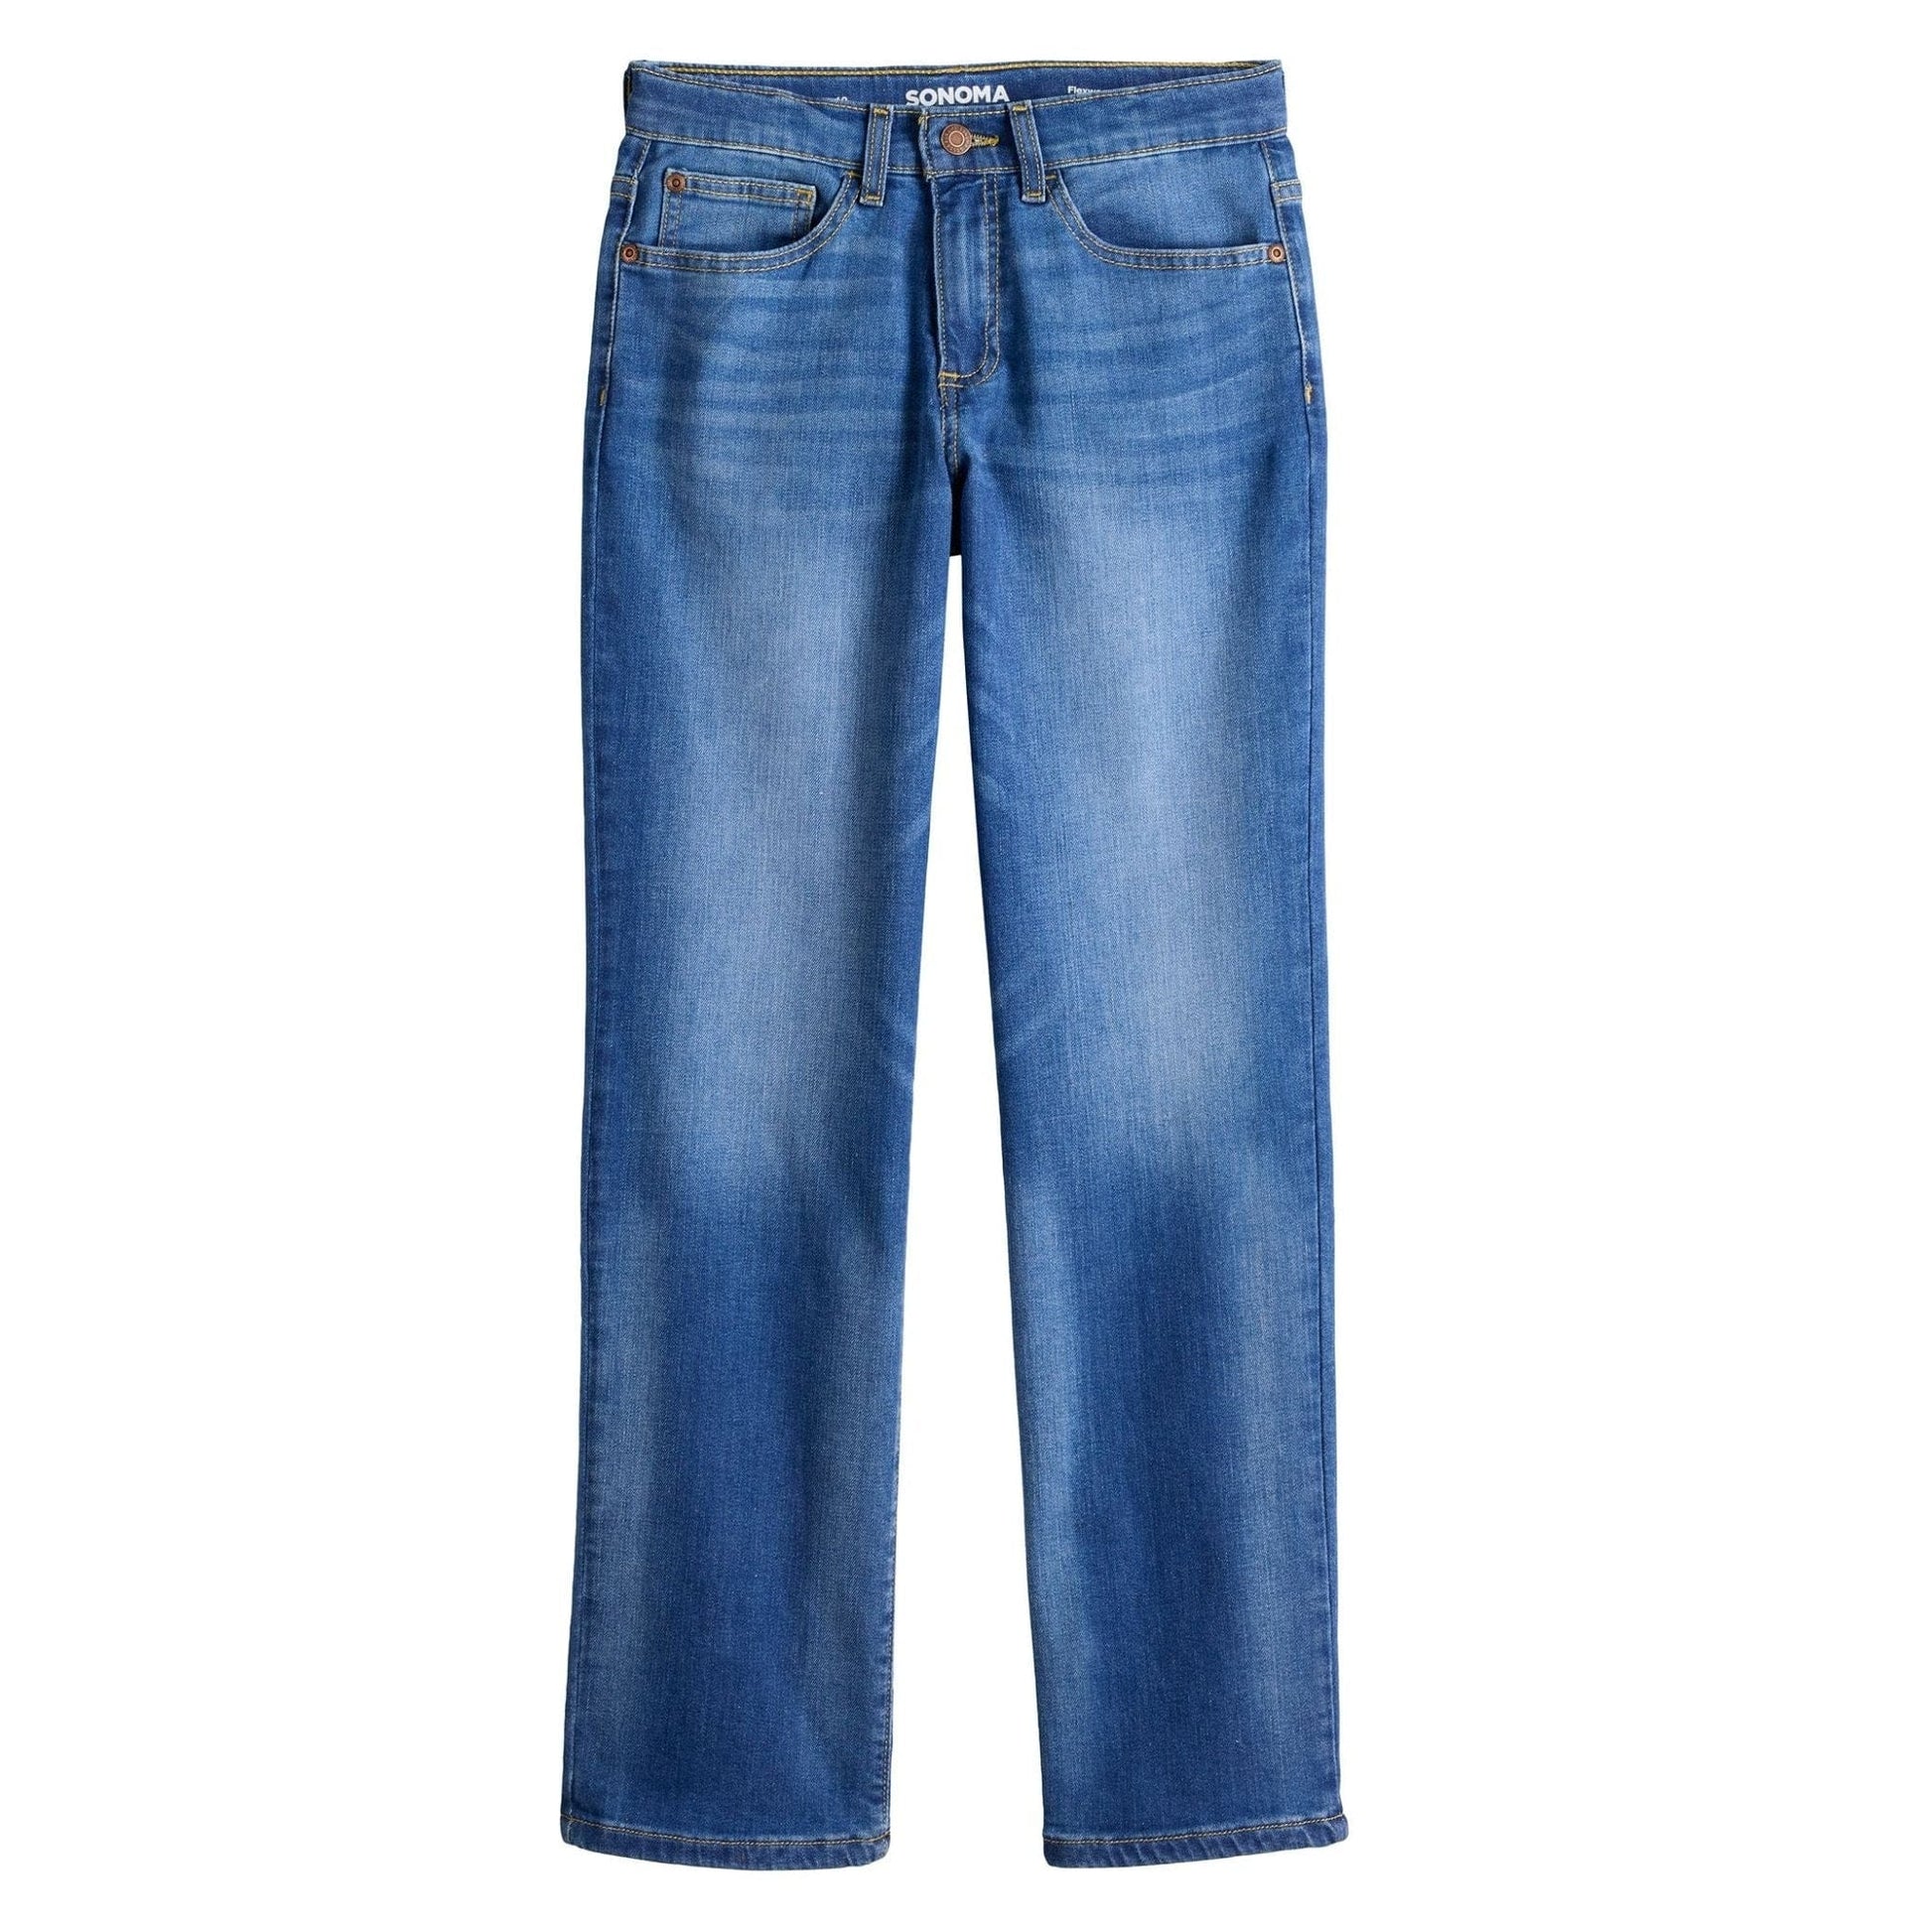 Boys 7-20 Flex-wear Straight Jeans in Regular, Slim & Husky - CLASSY CLOSET BOUTIQUEBoys 7-20 Flex-wear Straight Jeans in Regular, Slim & Huskyjeans4986116Light Medium7 SLIM